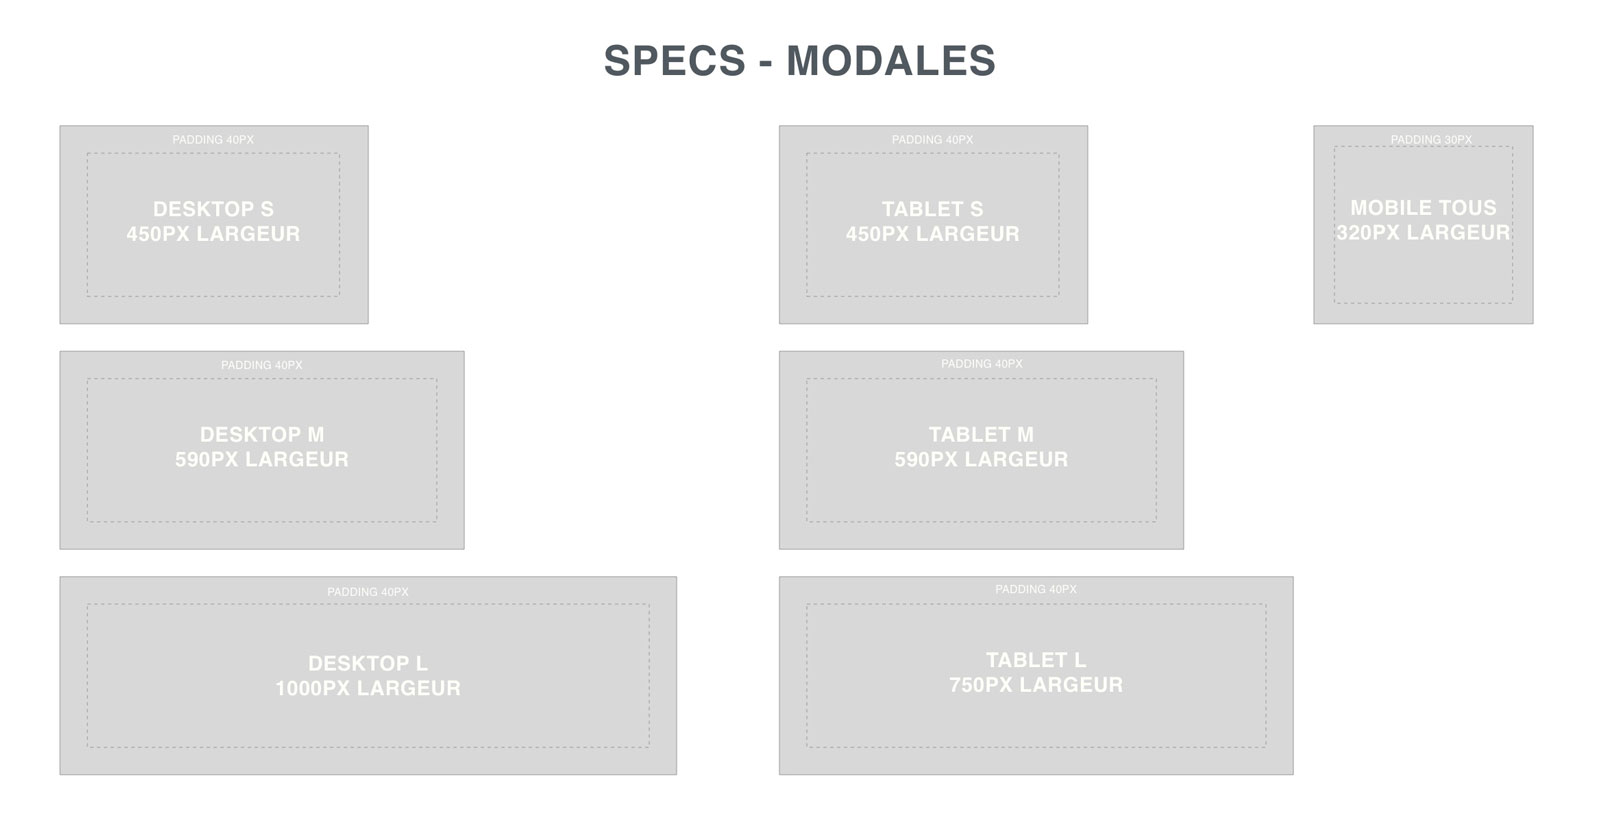 Standard modal sizes